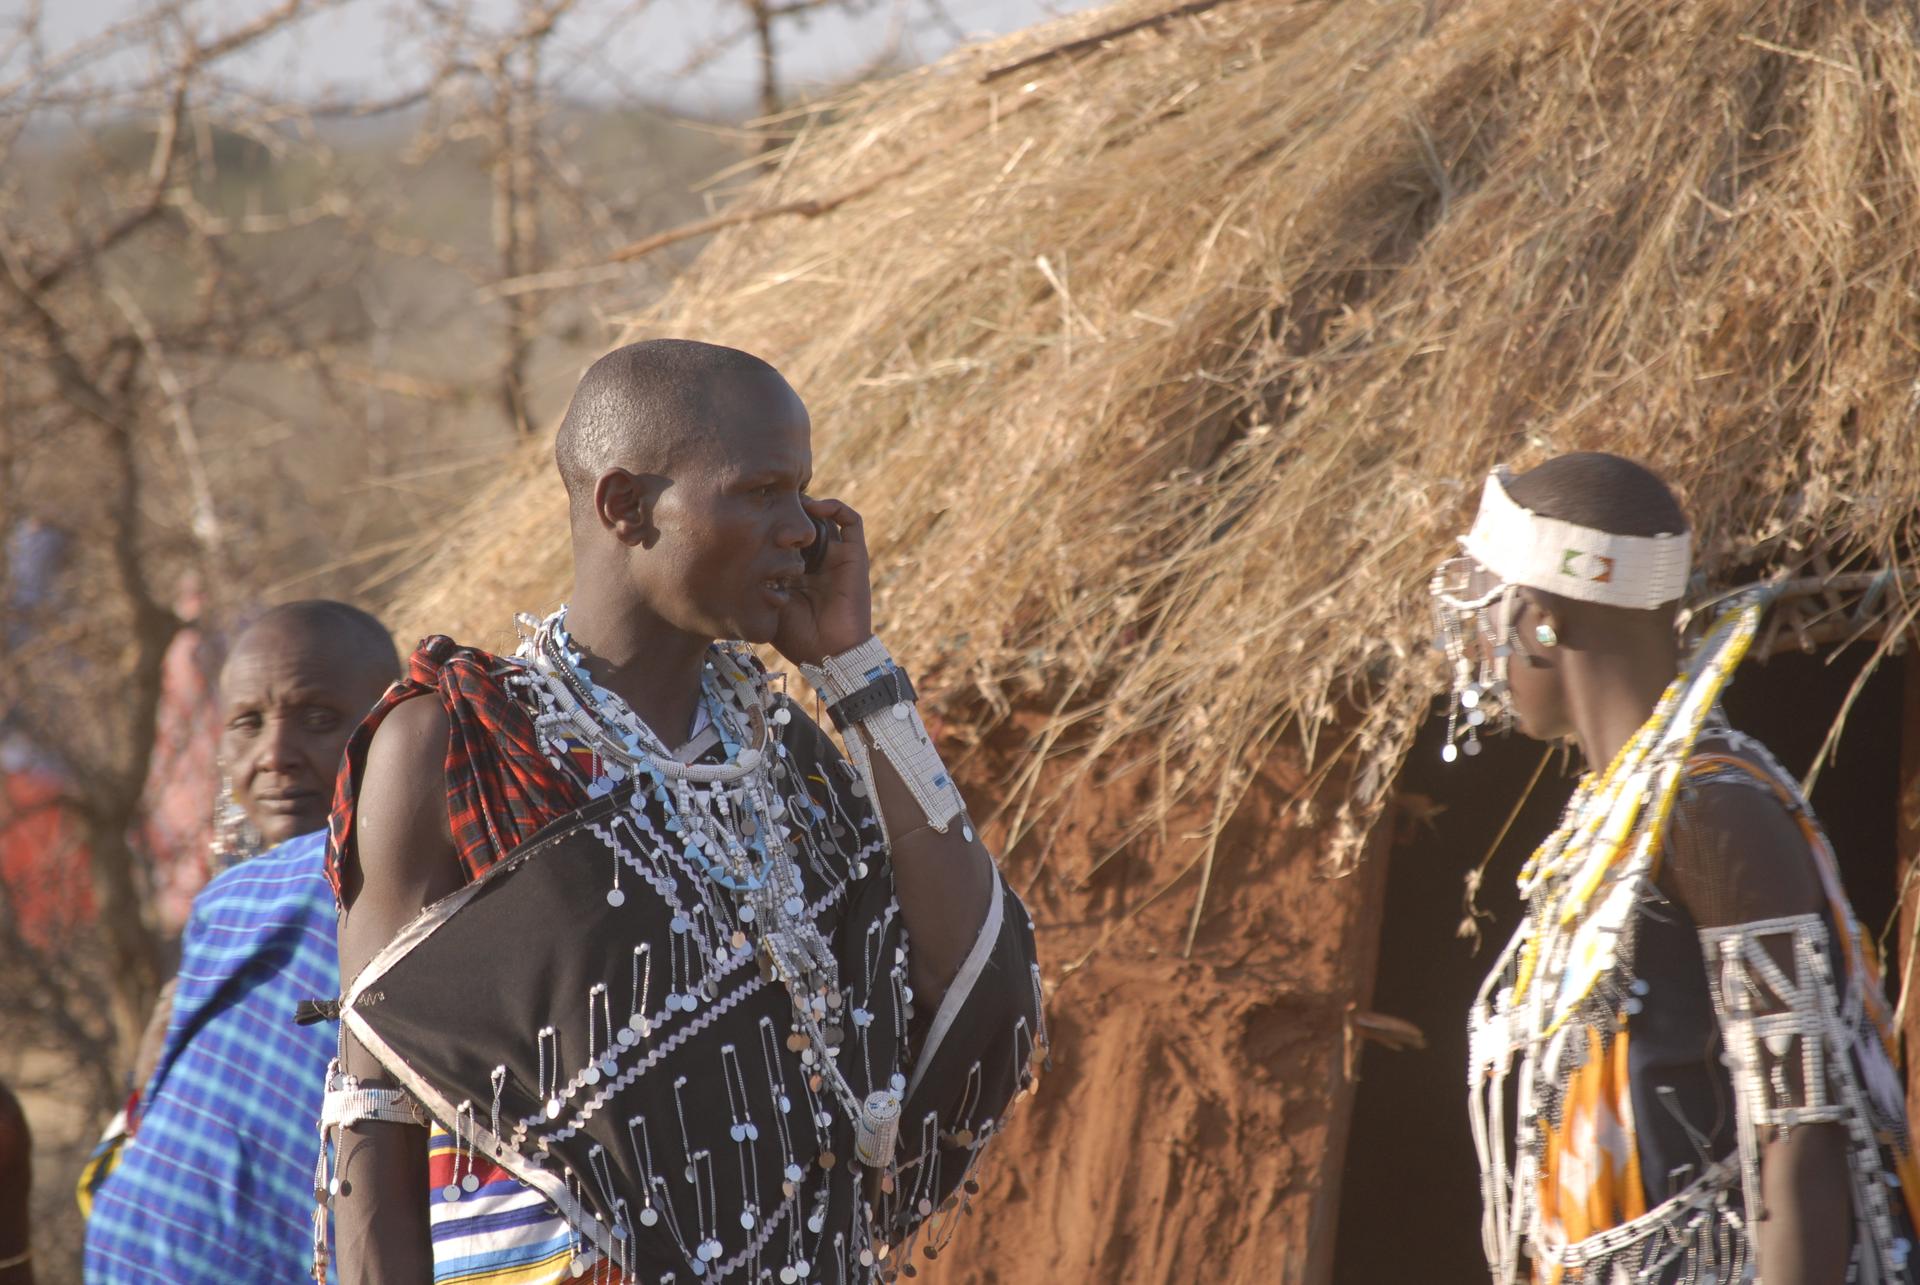 A Maasai man talks on his phone during a community gathering.